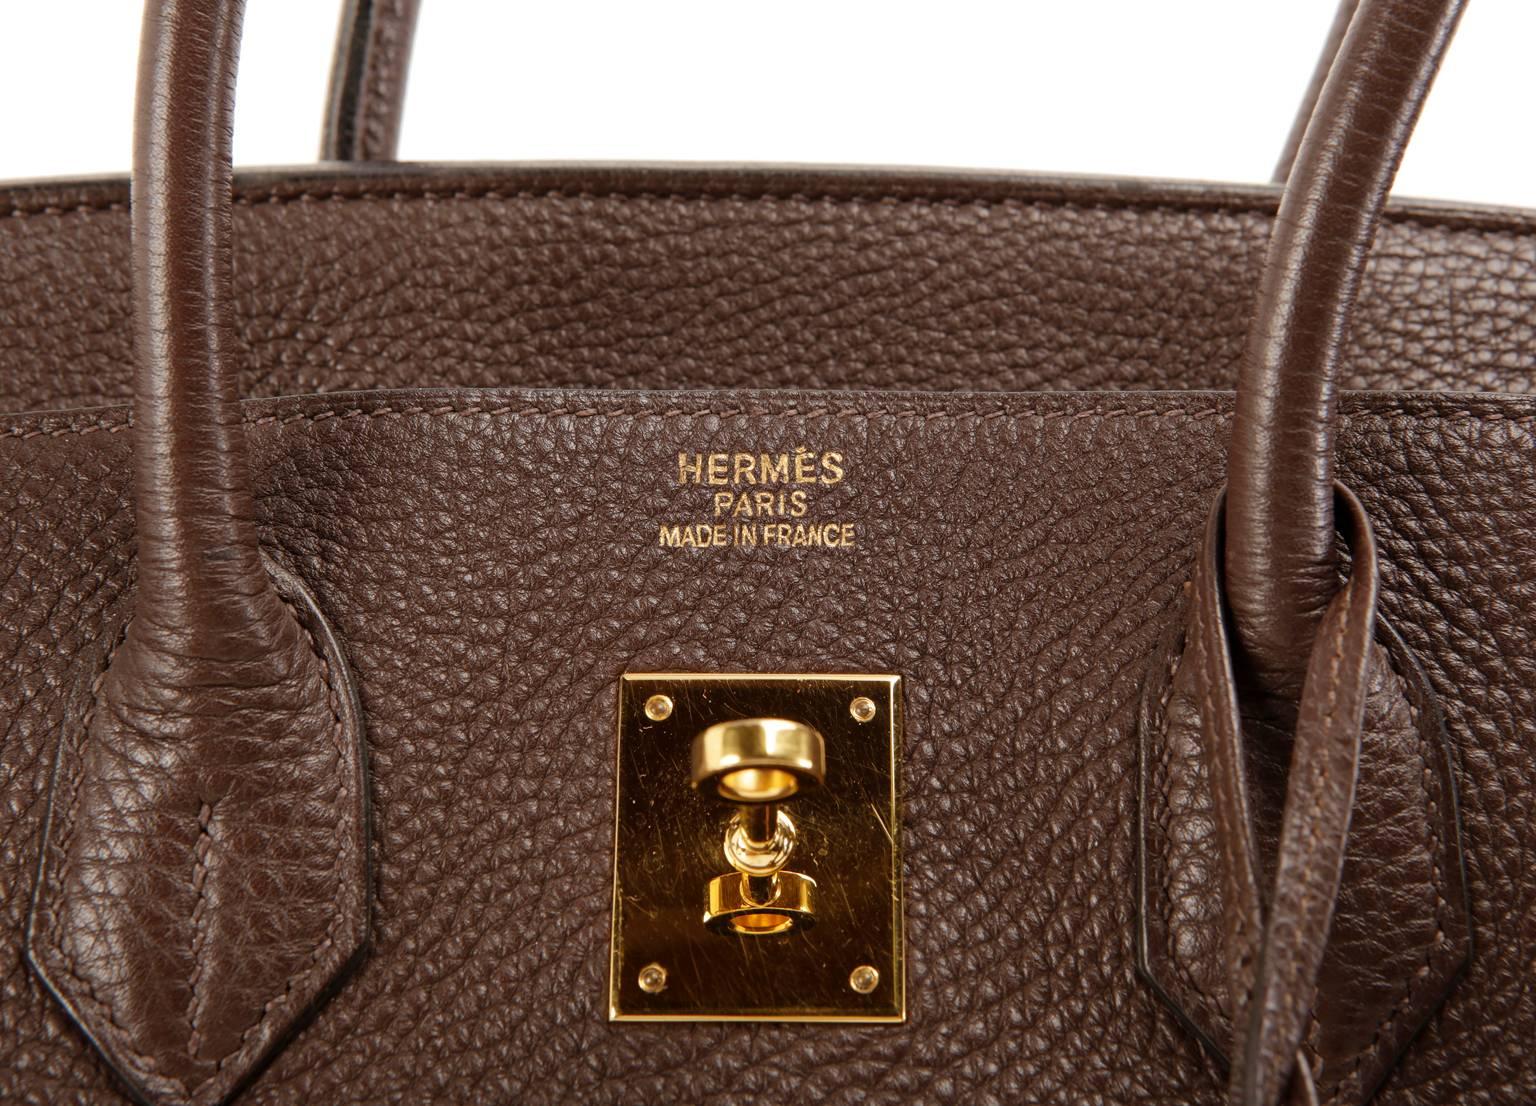 Hermès  Brown Togo Leather 35 cm Birkin Bag with GHW 1